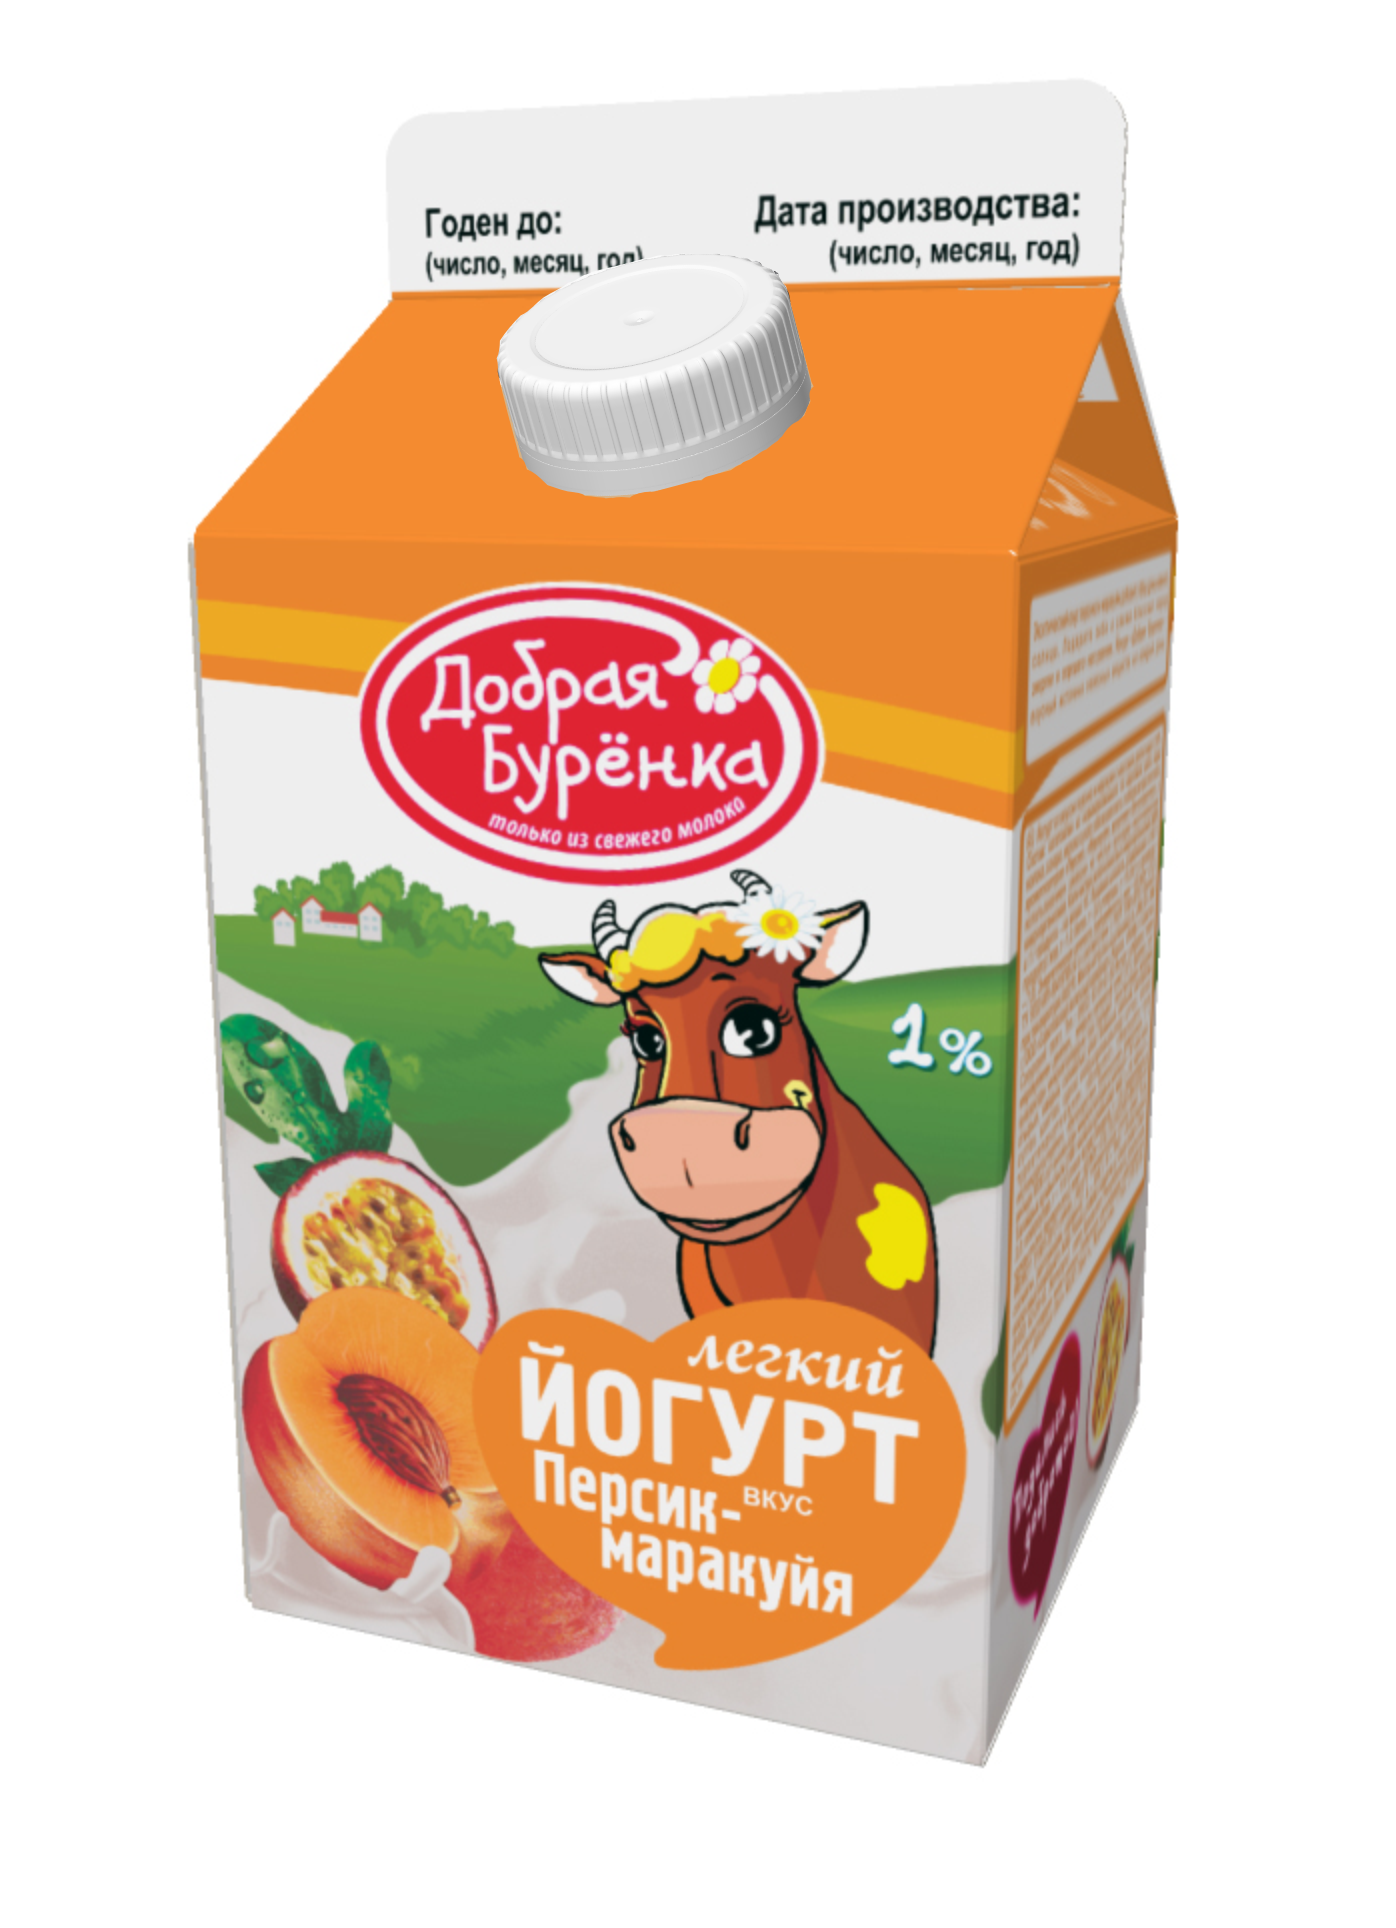 Йогурт Персик - Маракуйя